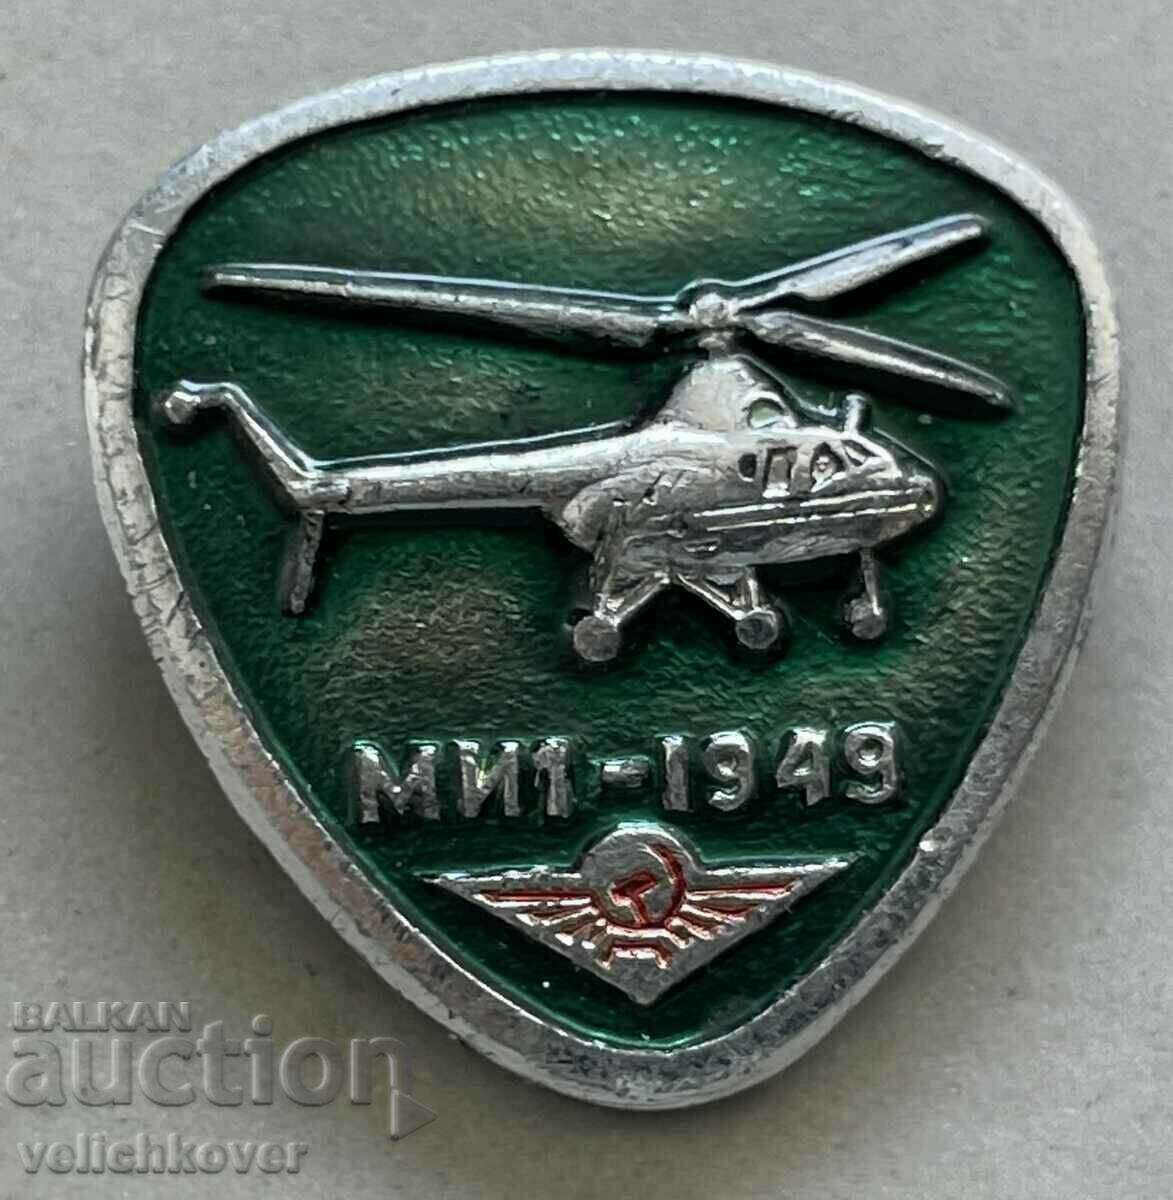 35367 însemnele URSS elicopter model MI1 1949.